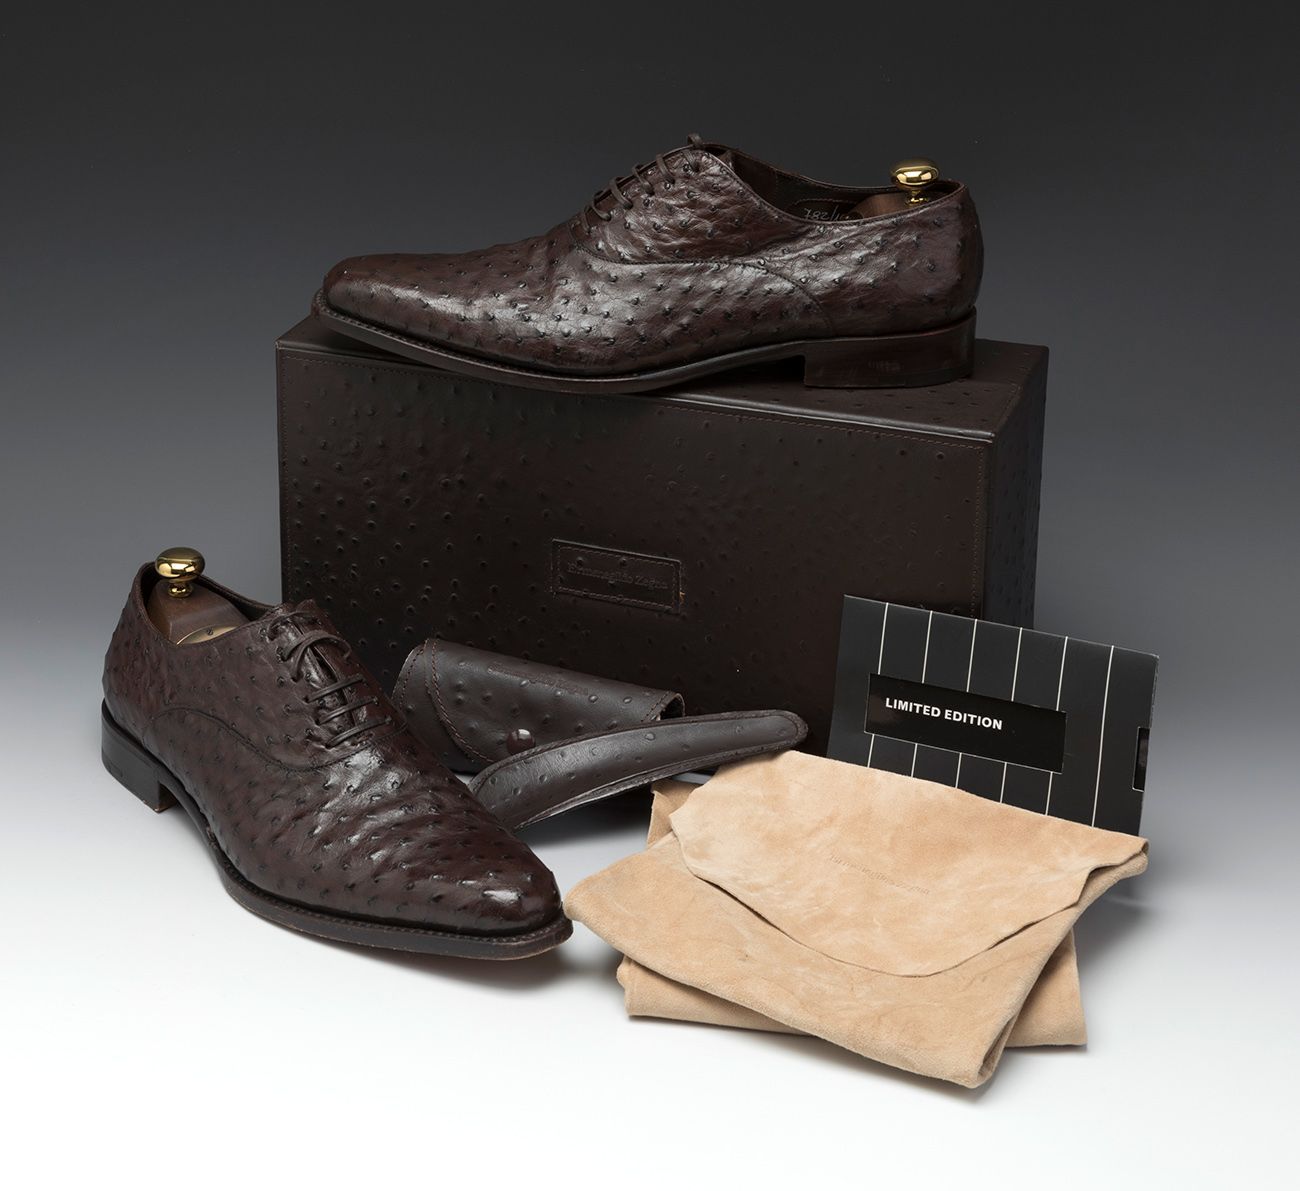 ERMENEGILDO ZEGNA. Limited edition dress shoes, exempla…